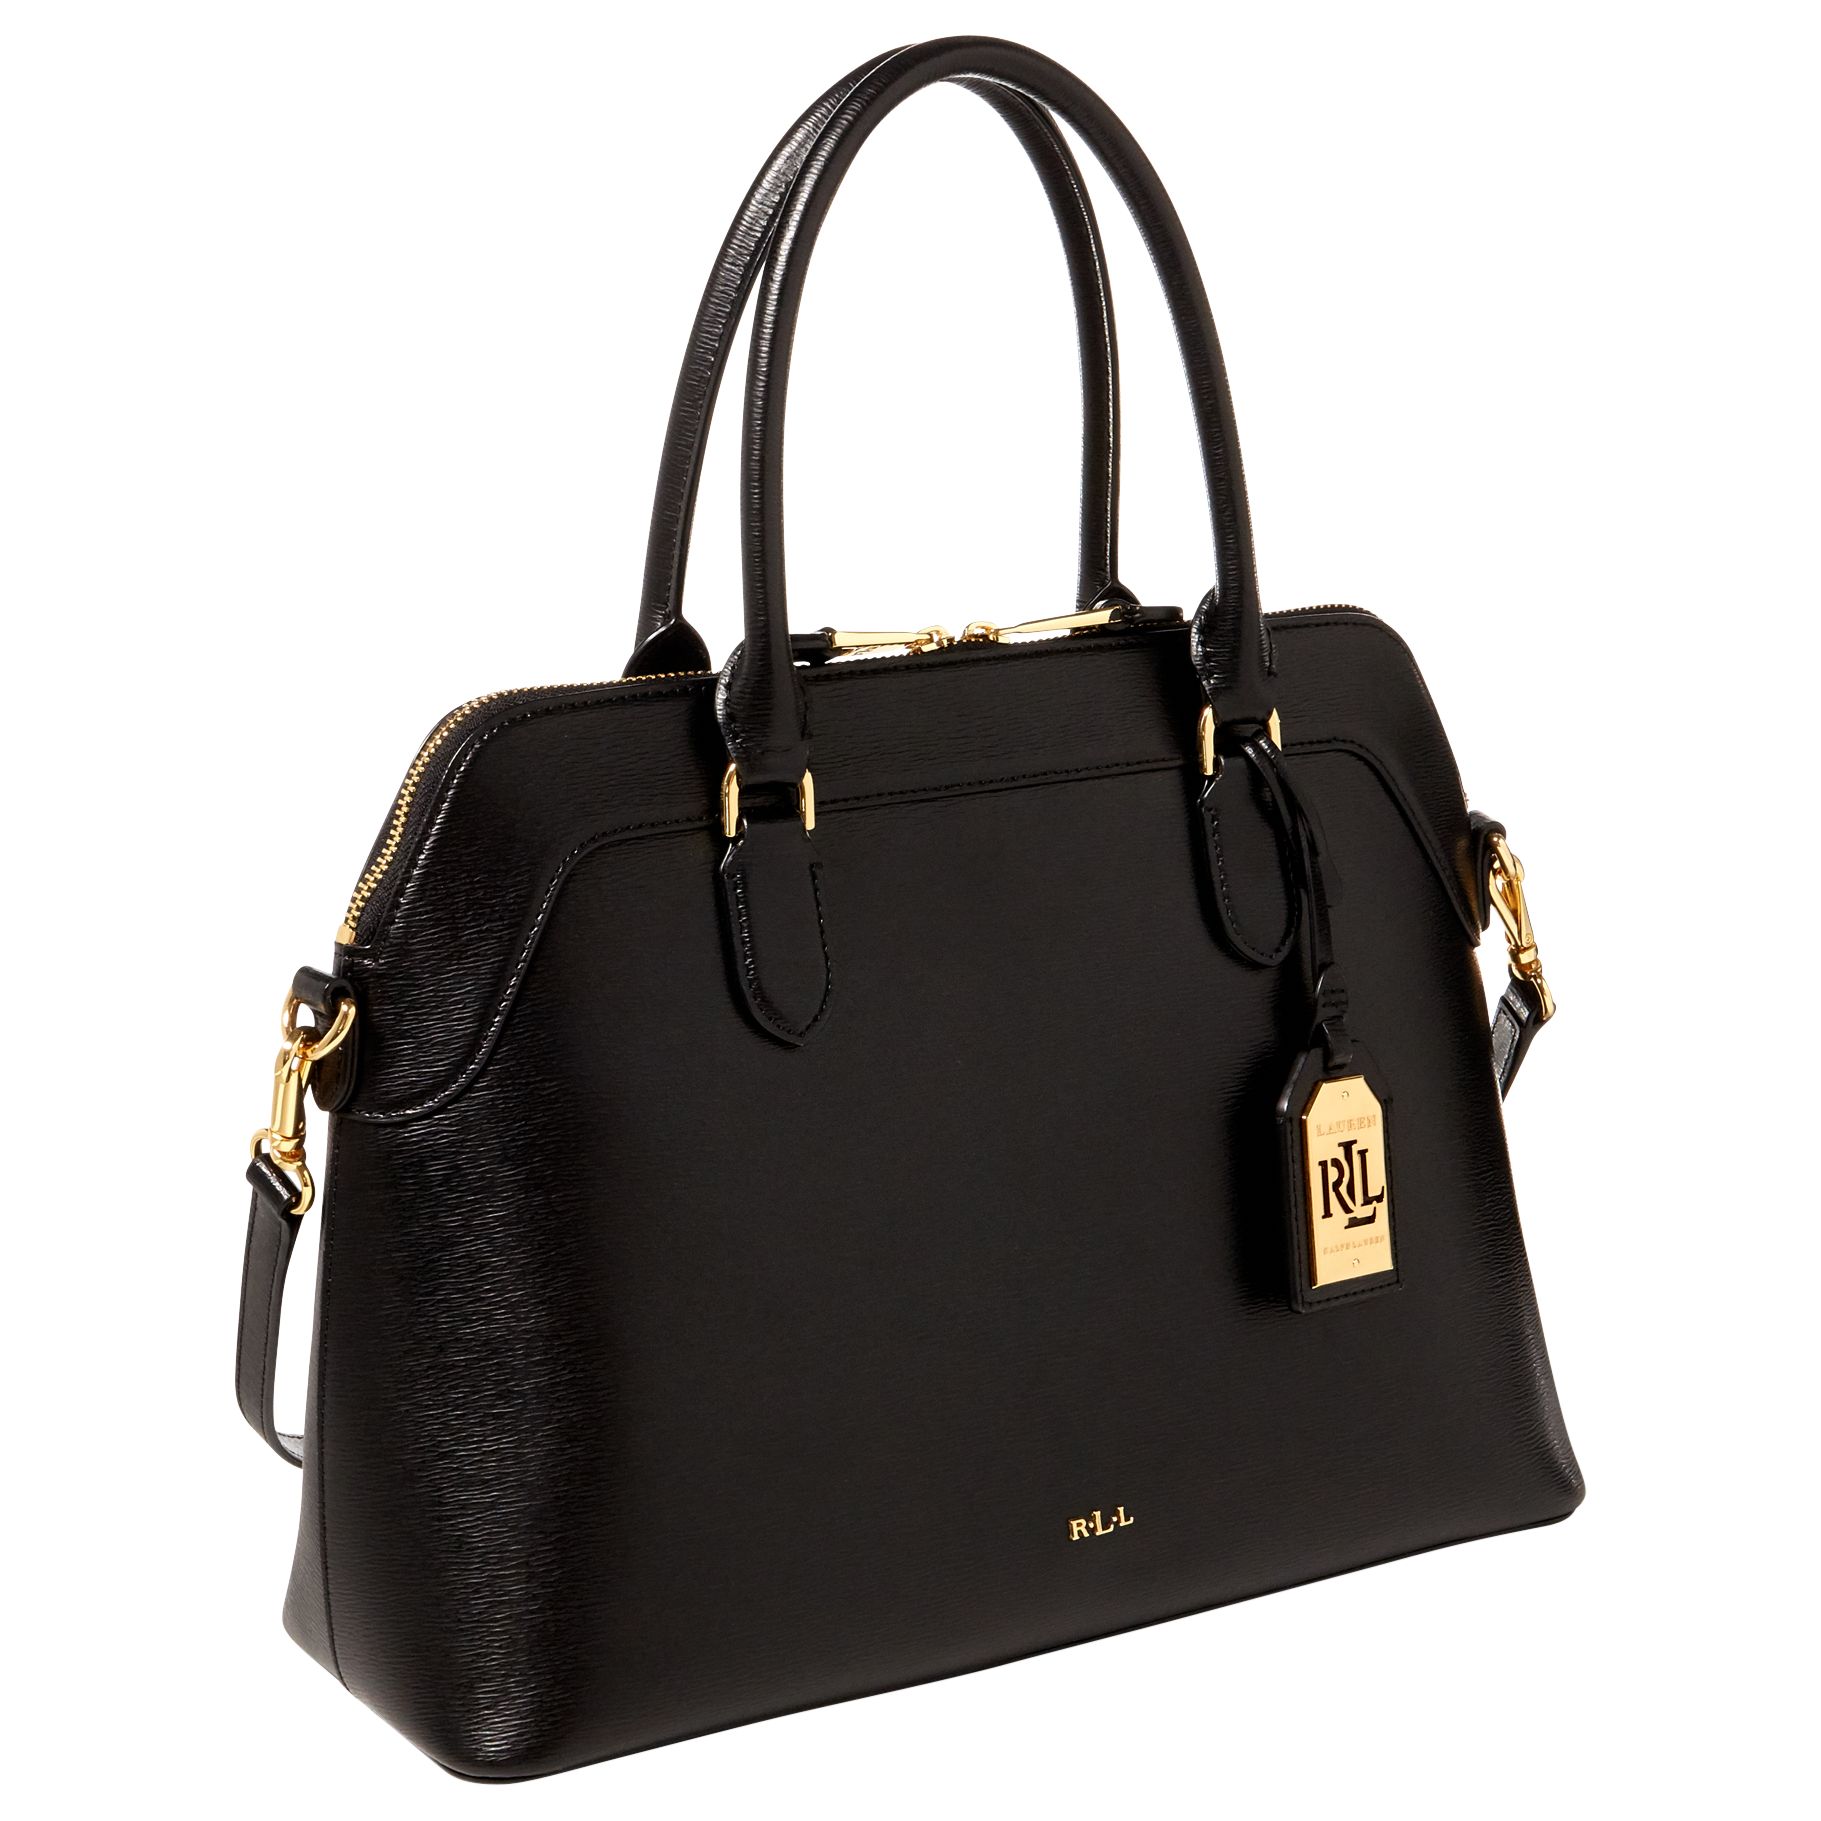 rll black purse 995137